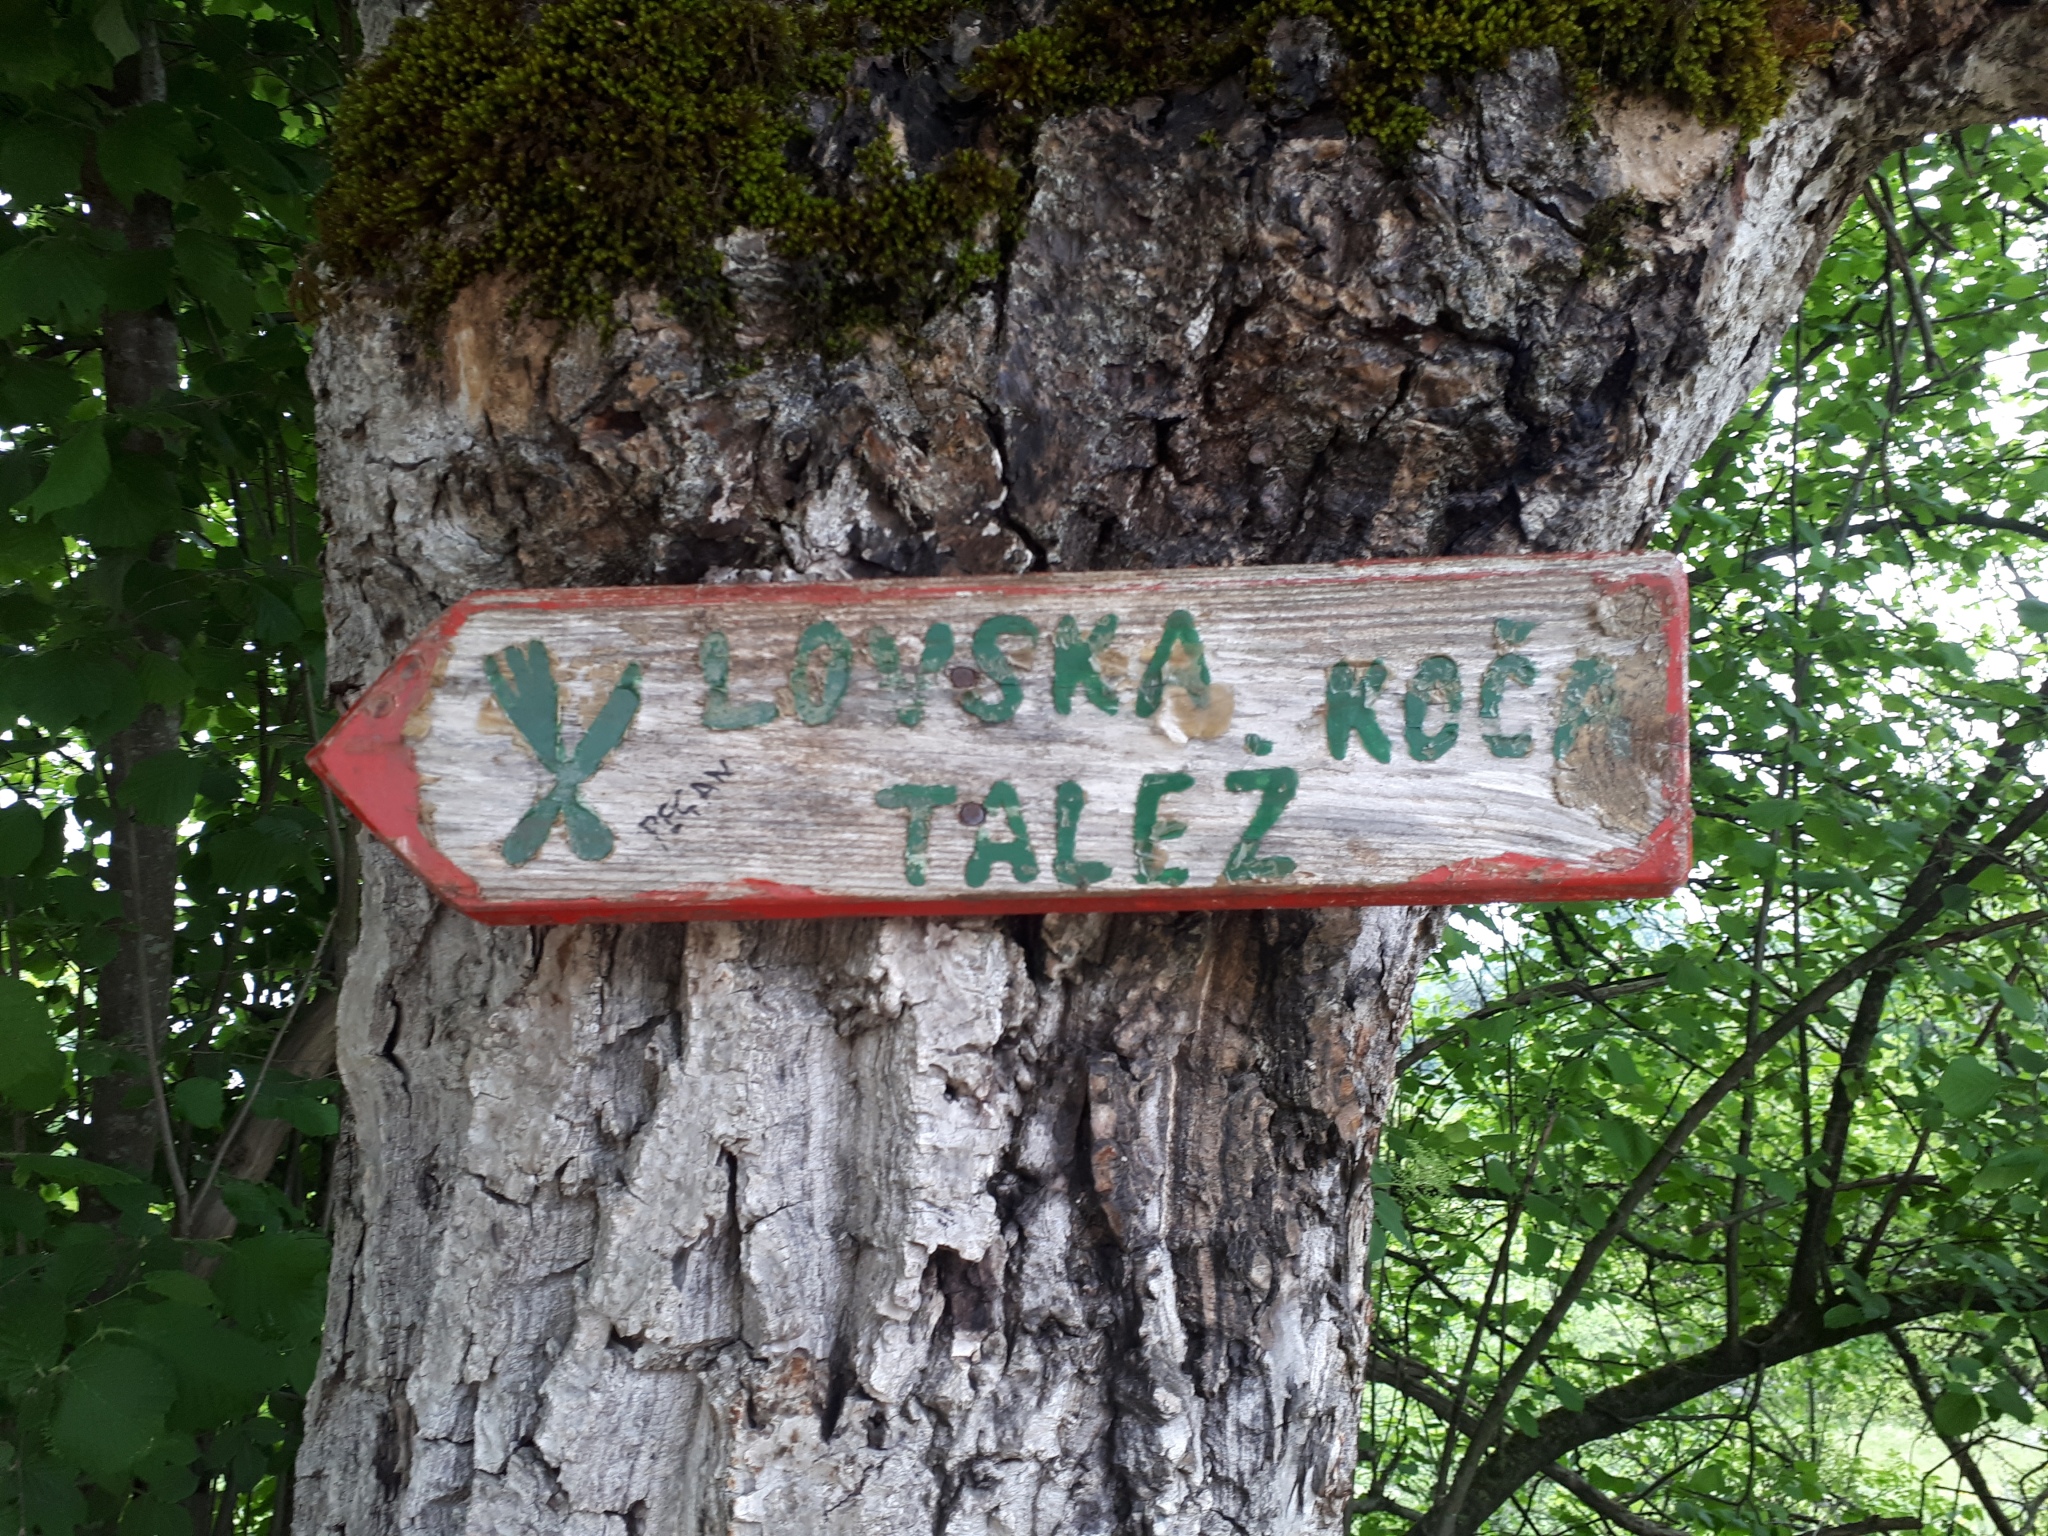 All Trails Lead to Talež!